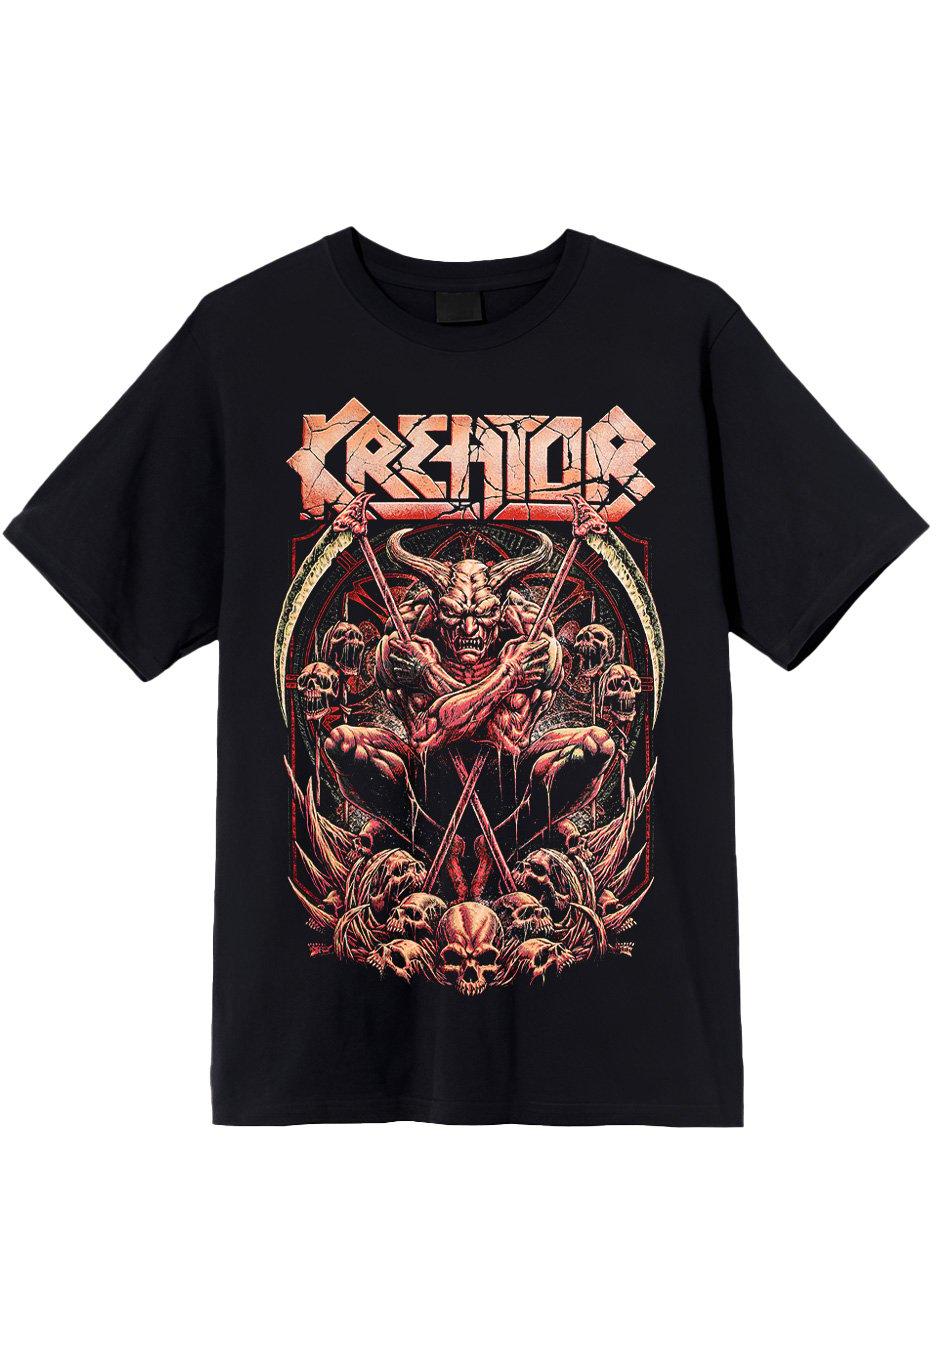 Kreator - Demonic Future - T-Shirt